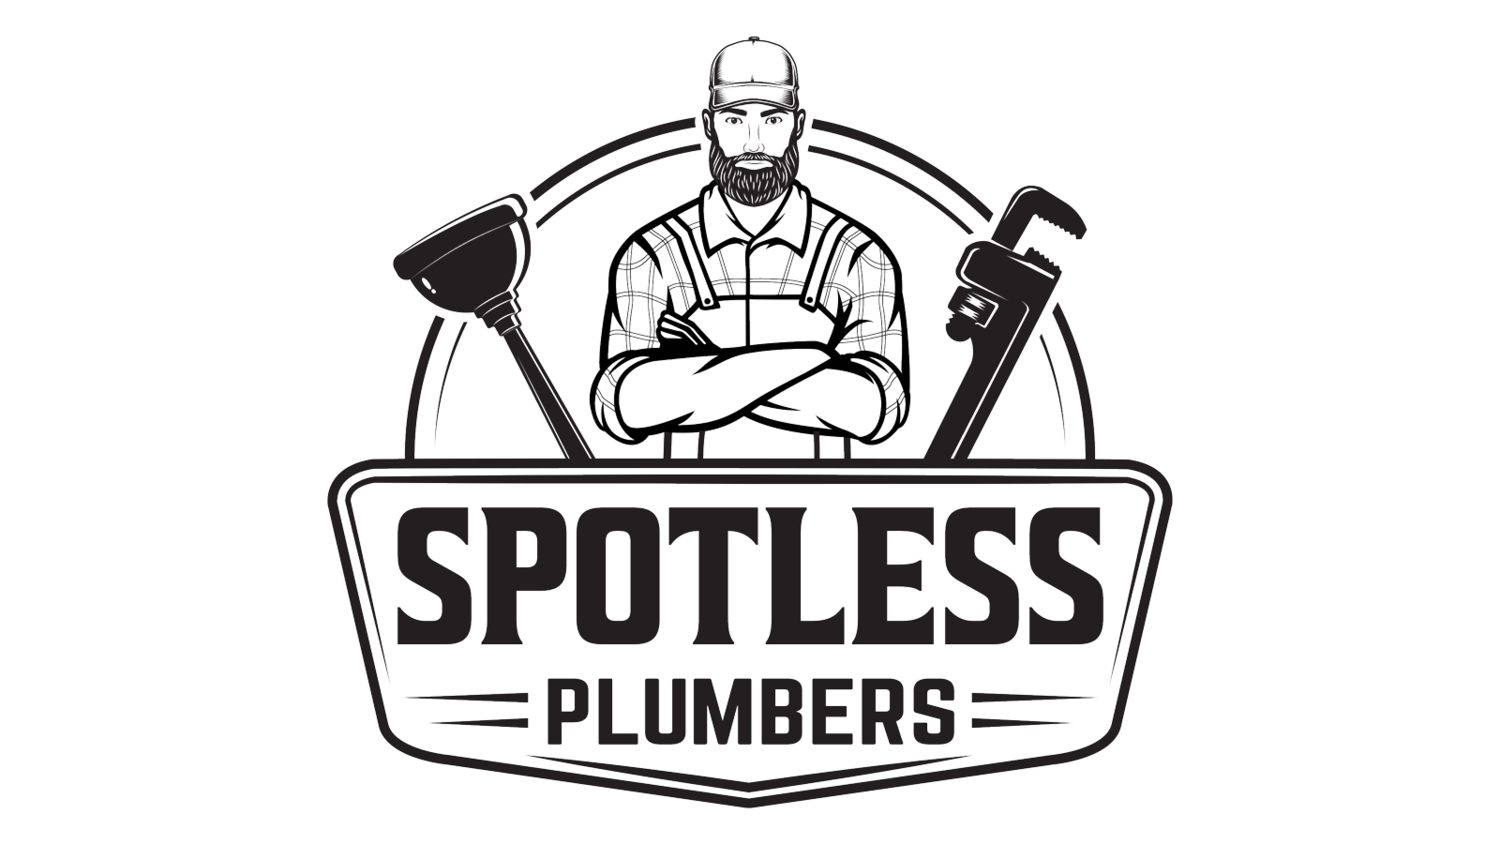 Spotless Plumbers